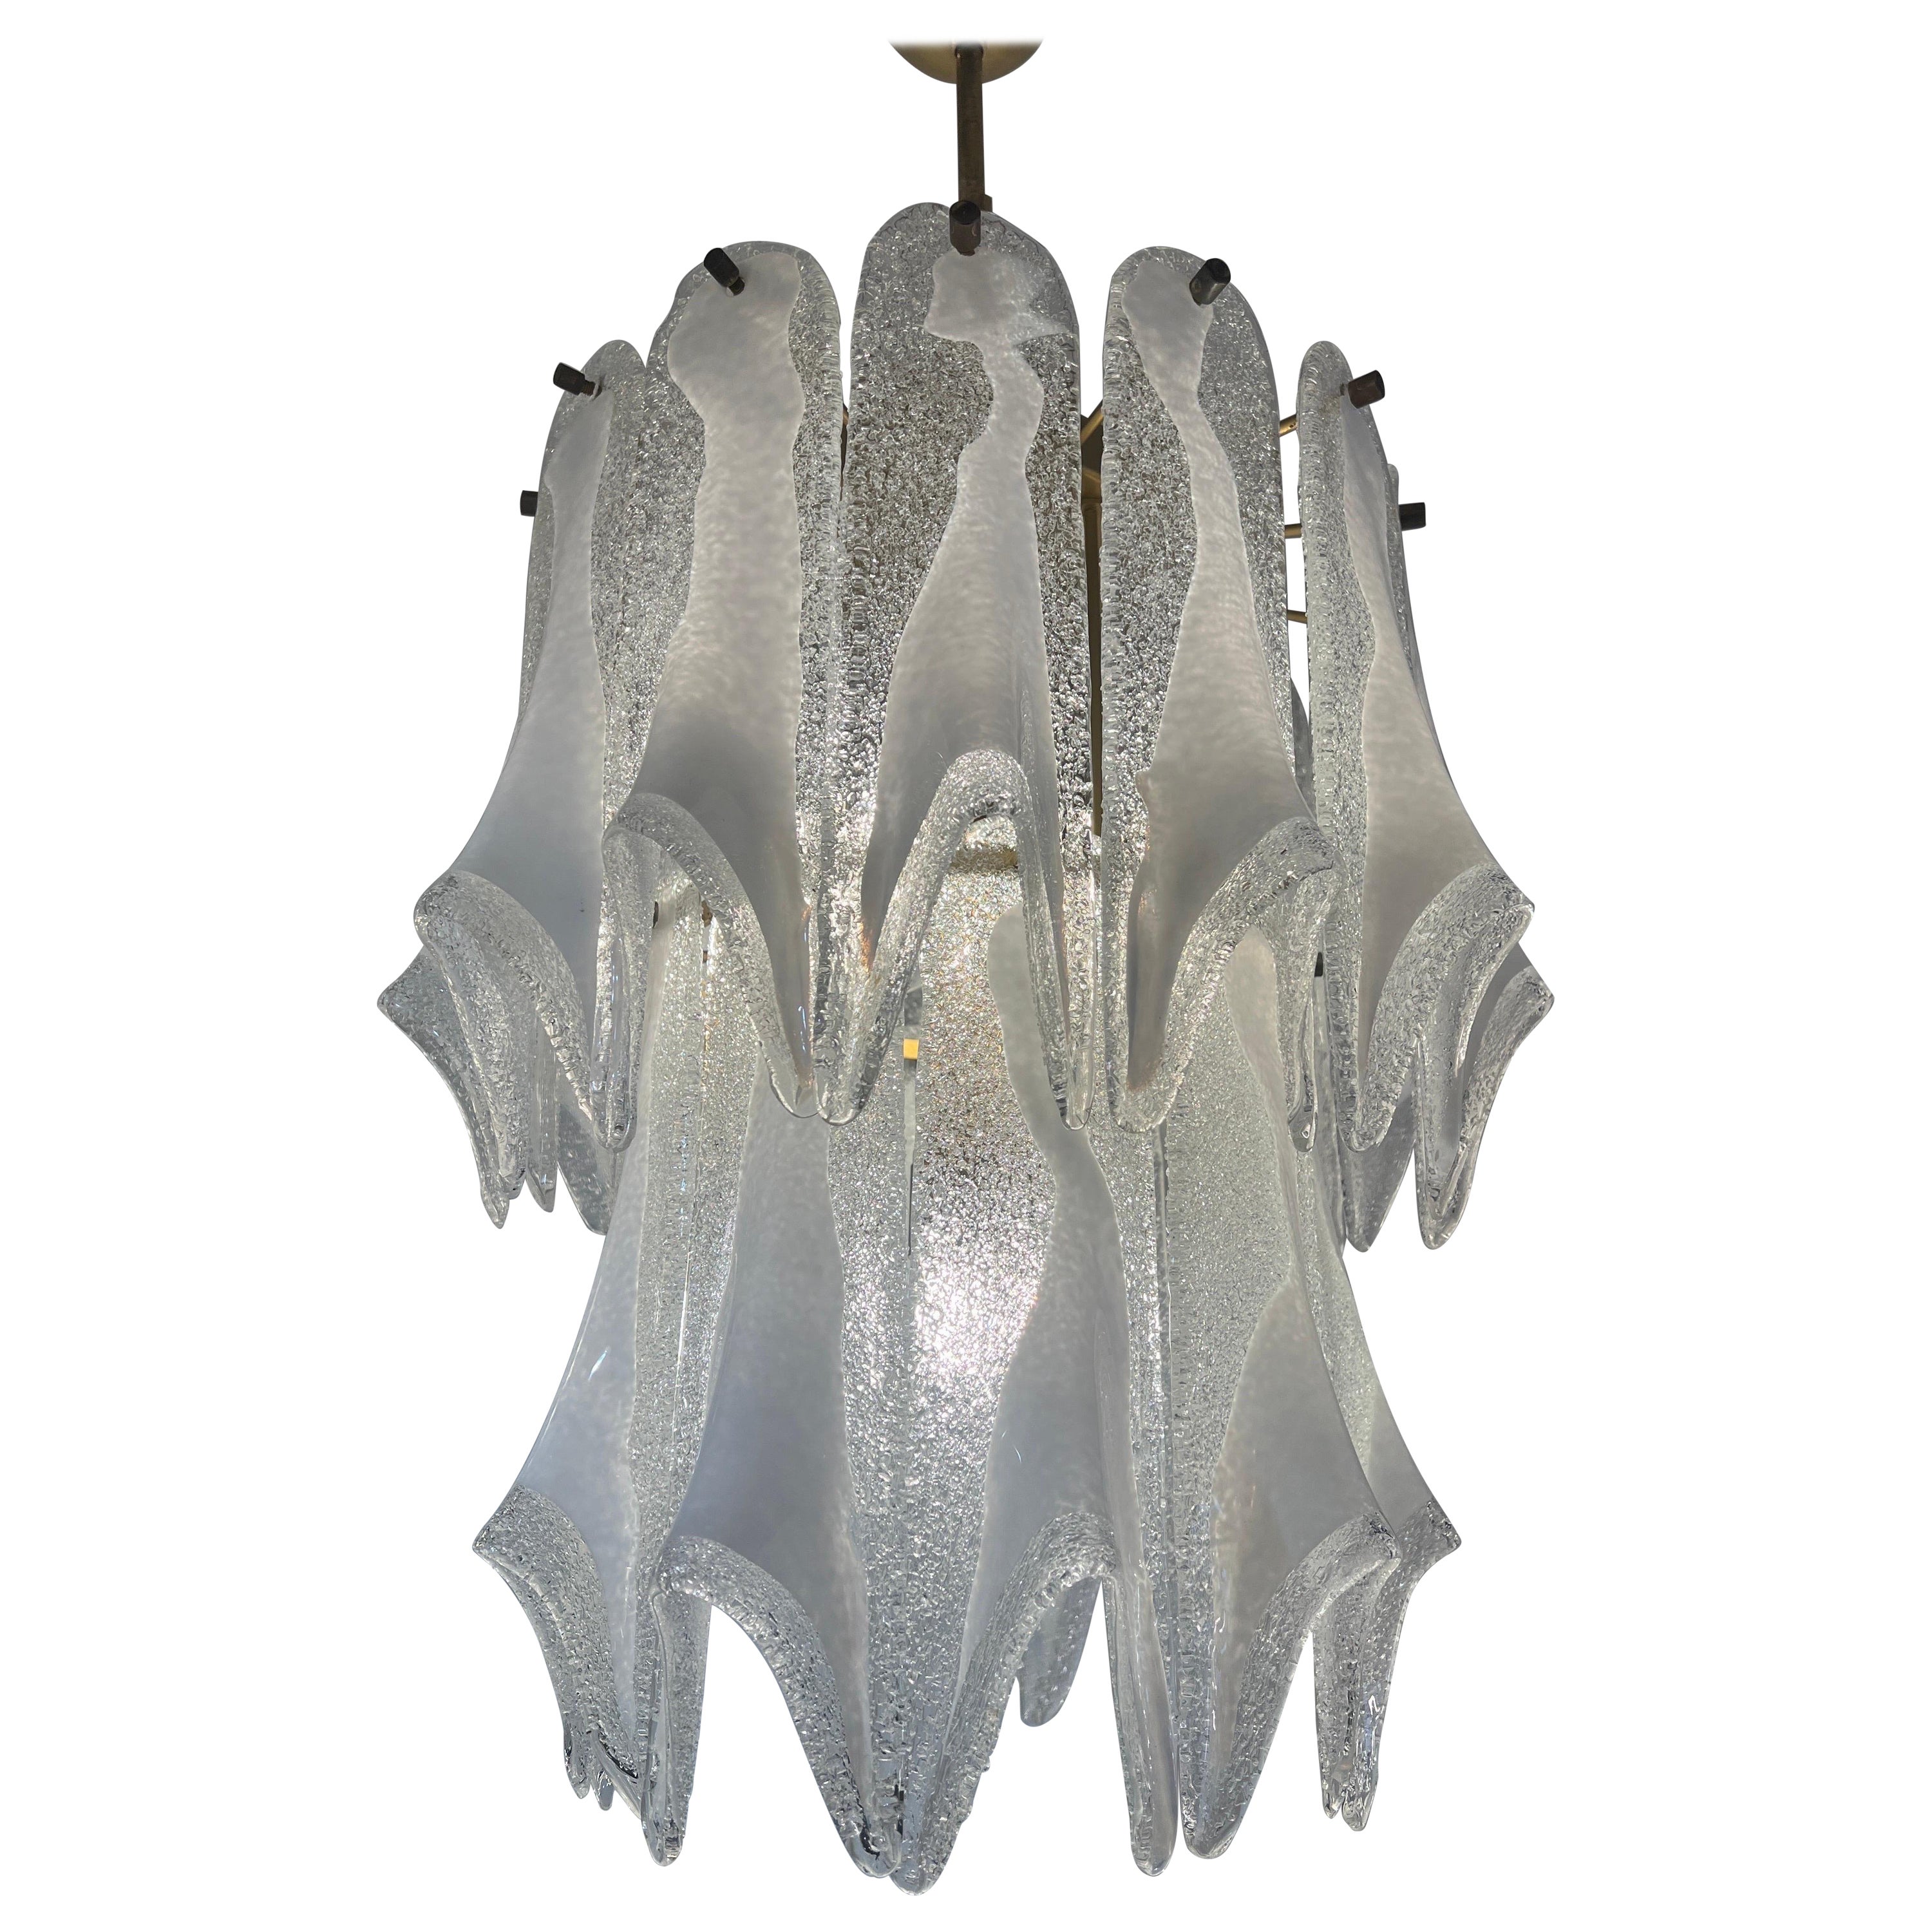 1960s art glass chandelier by Mazzega   For Sale